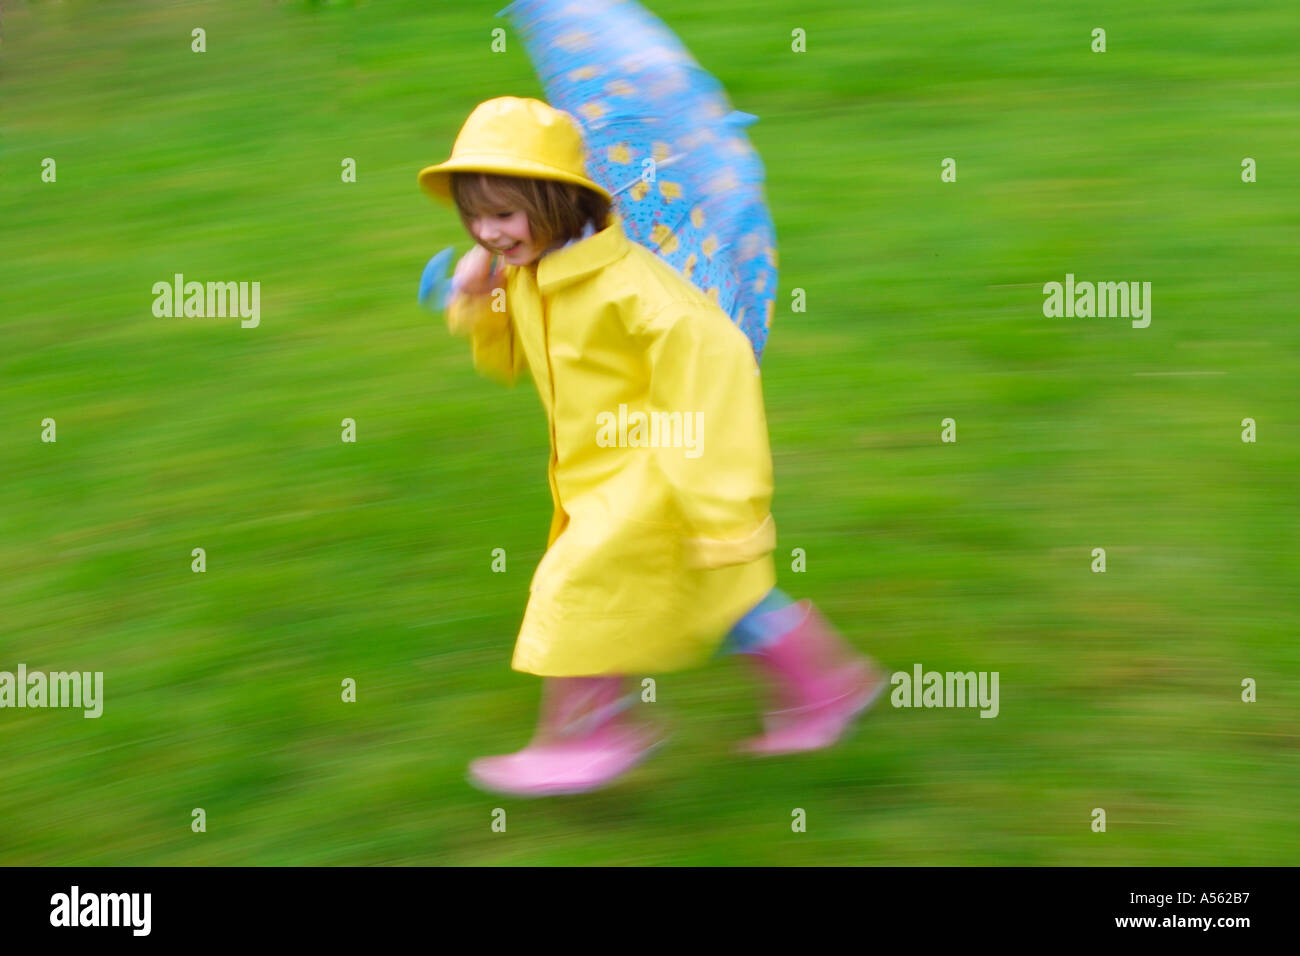 GIRL IN YELLOW MACKINTOSH WITH BLUE UMBRELLA RUNNING IN GARDEN UK Stock Photo